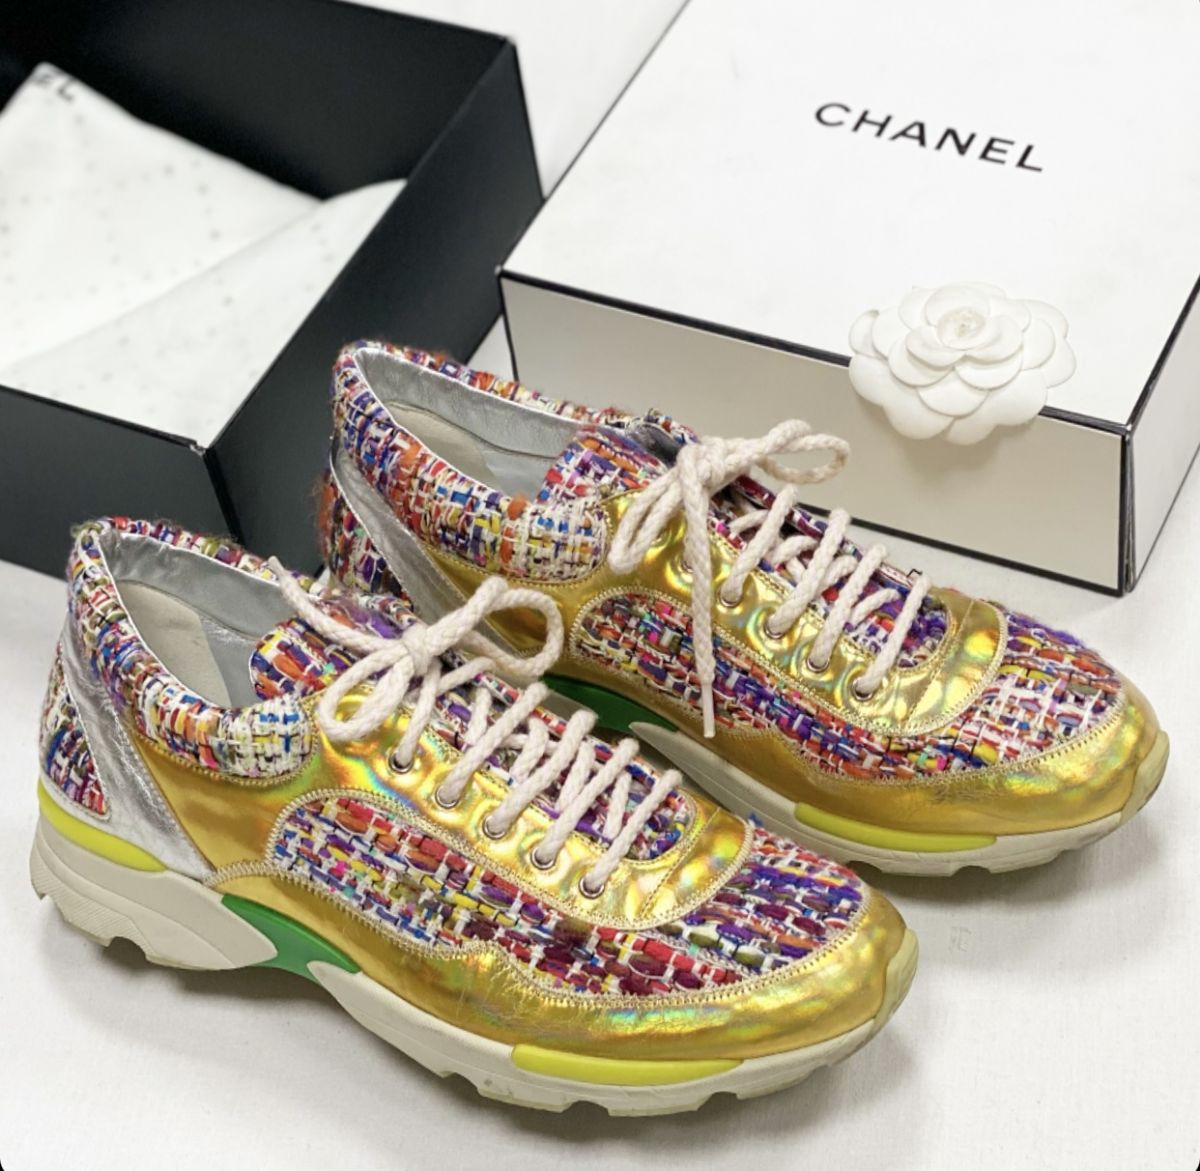 Кроссовки Chanel размер 40 цена 30 770 руб 